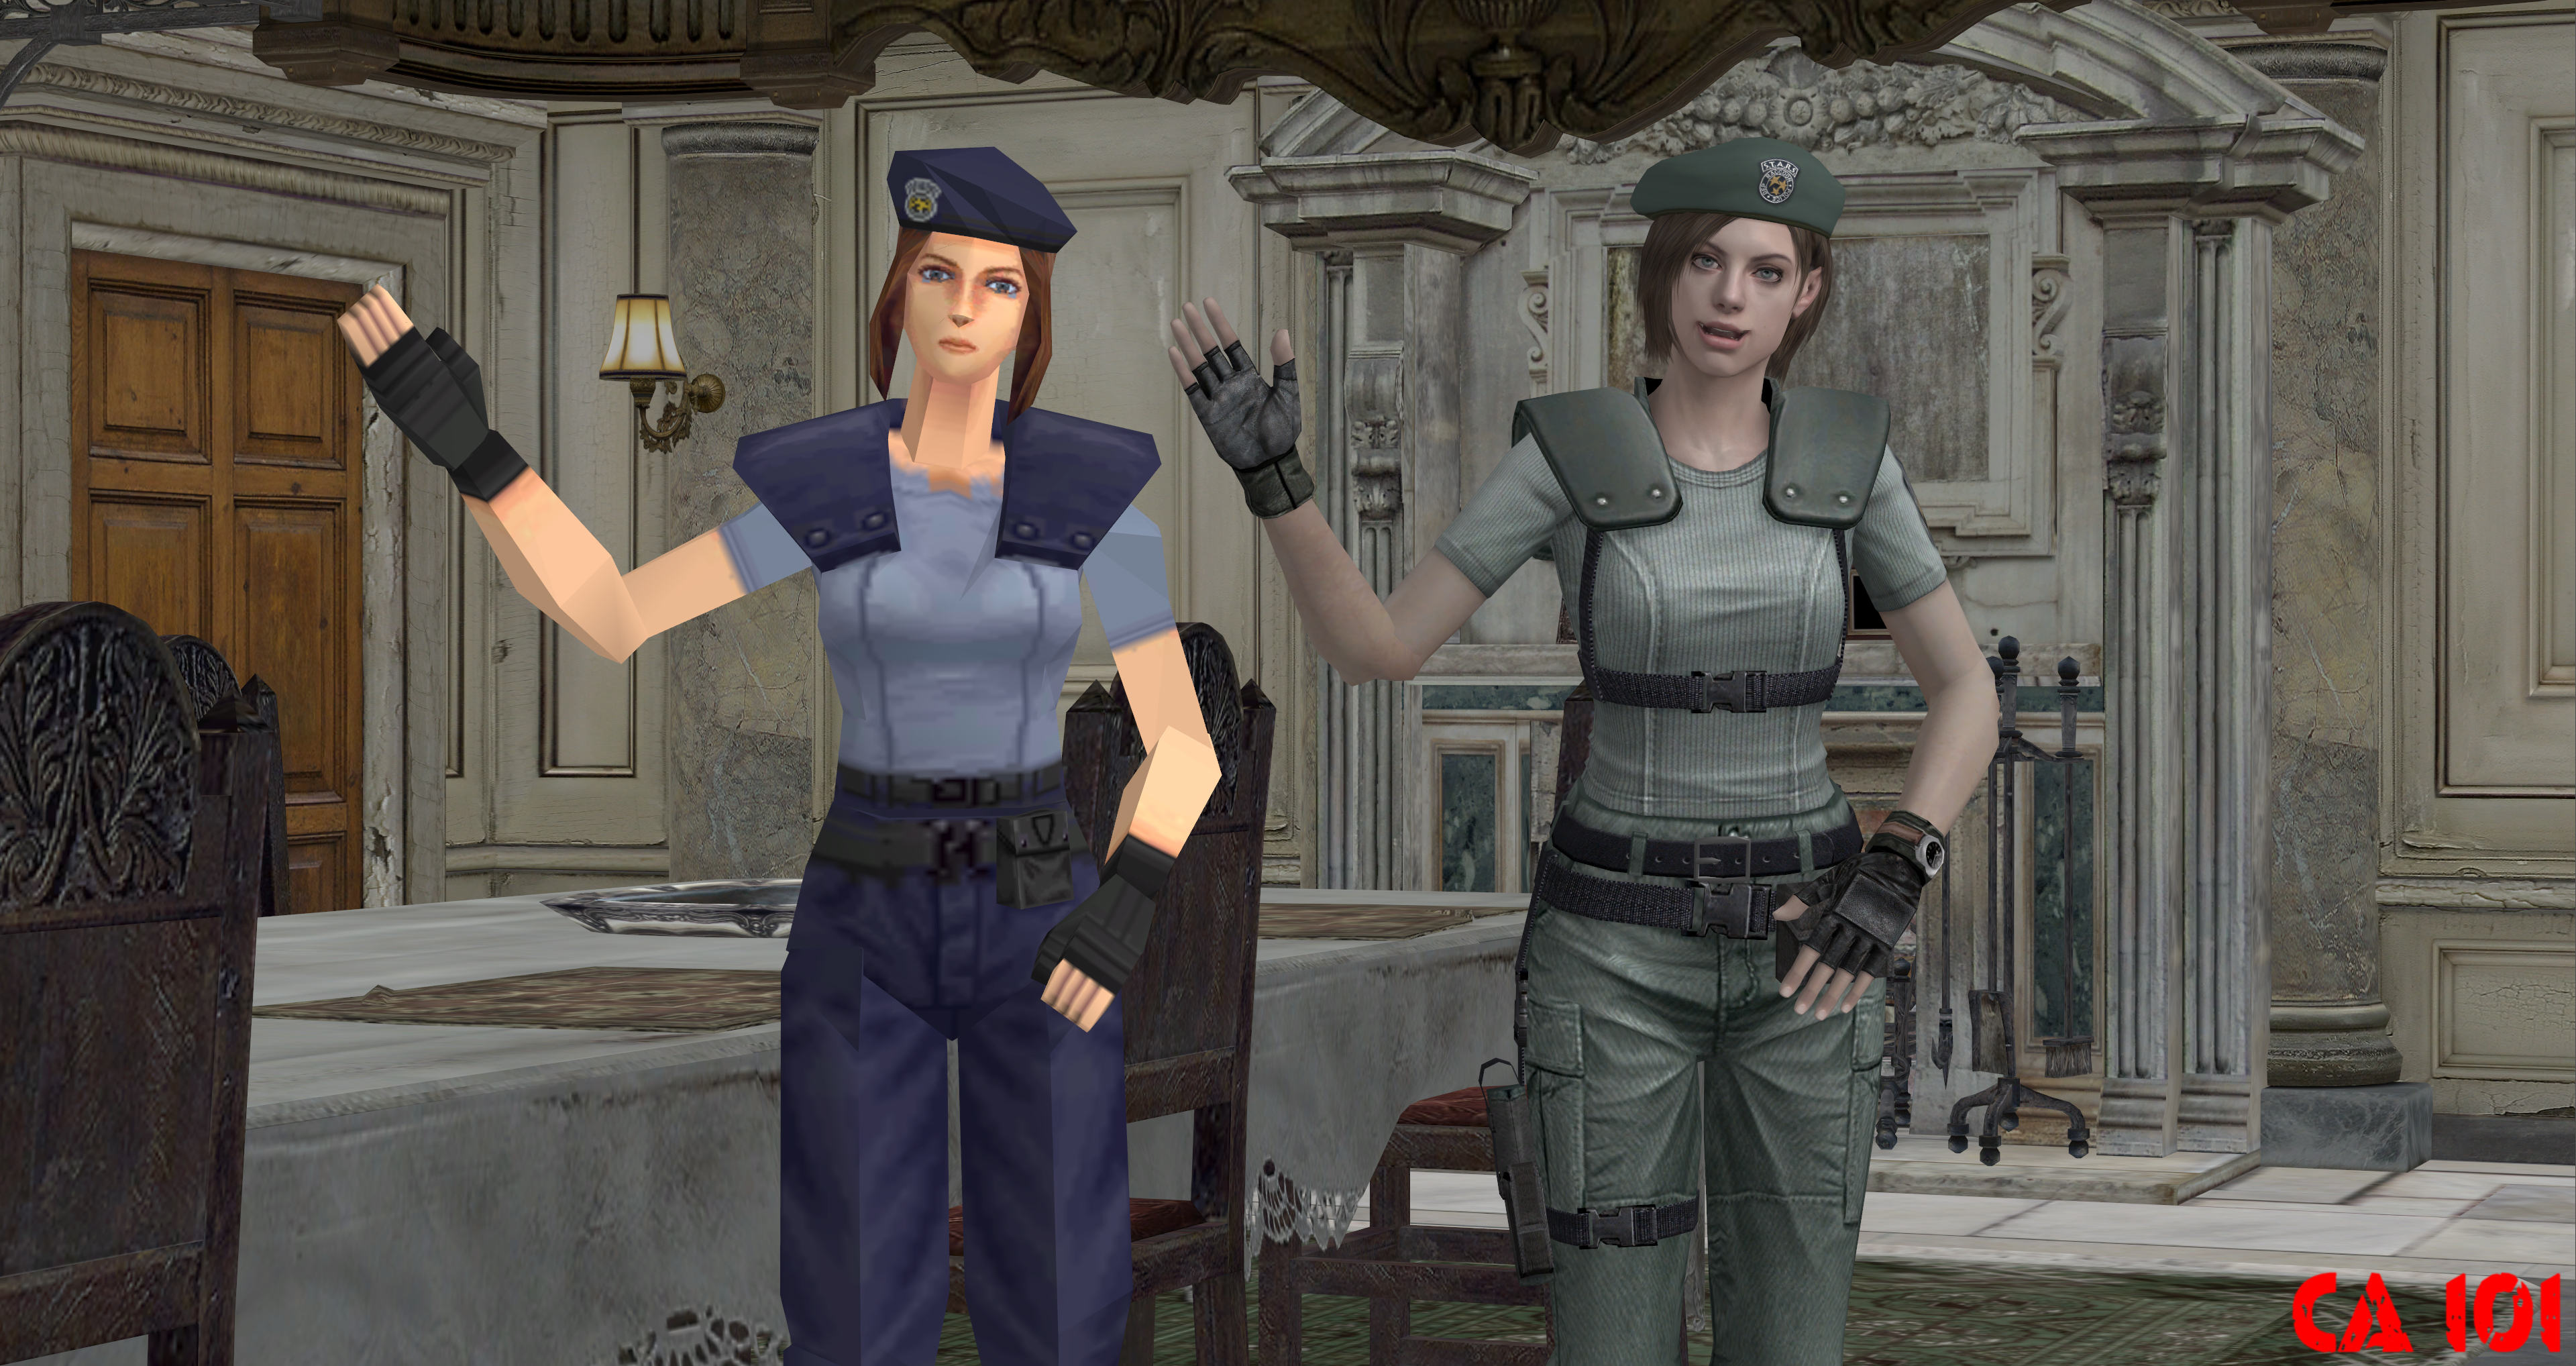 Resident Evil - original Vs. remake